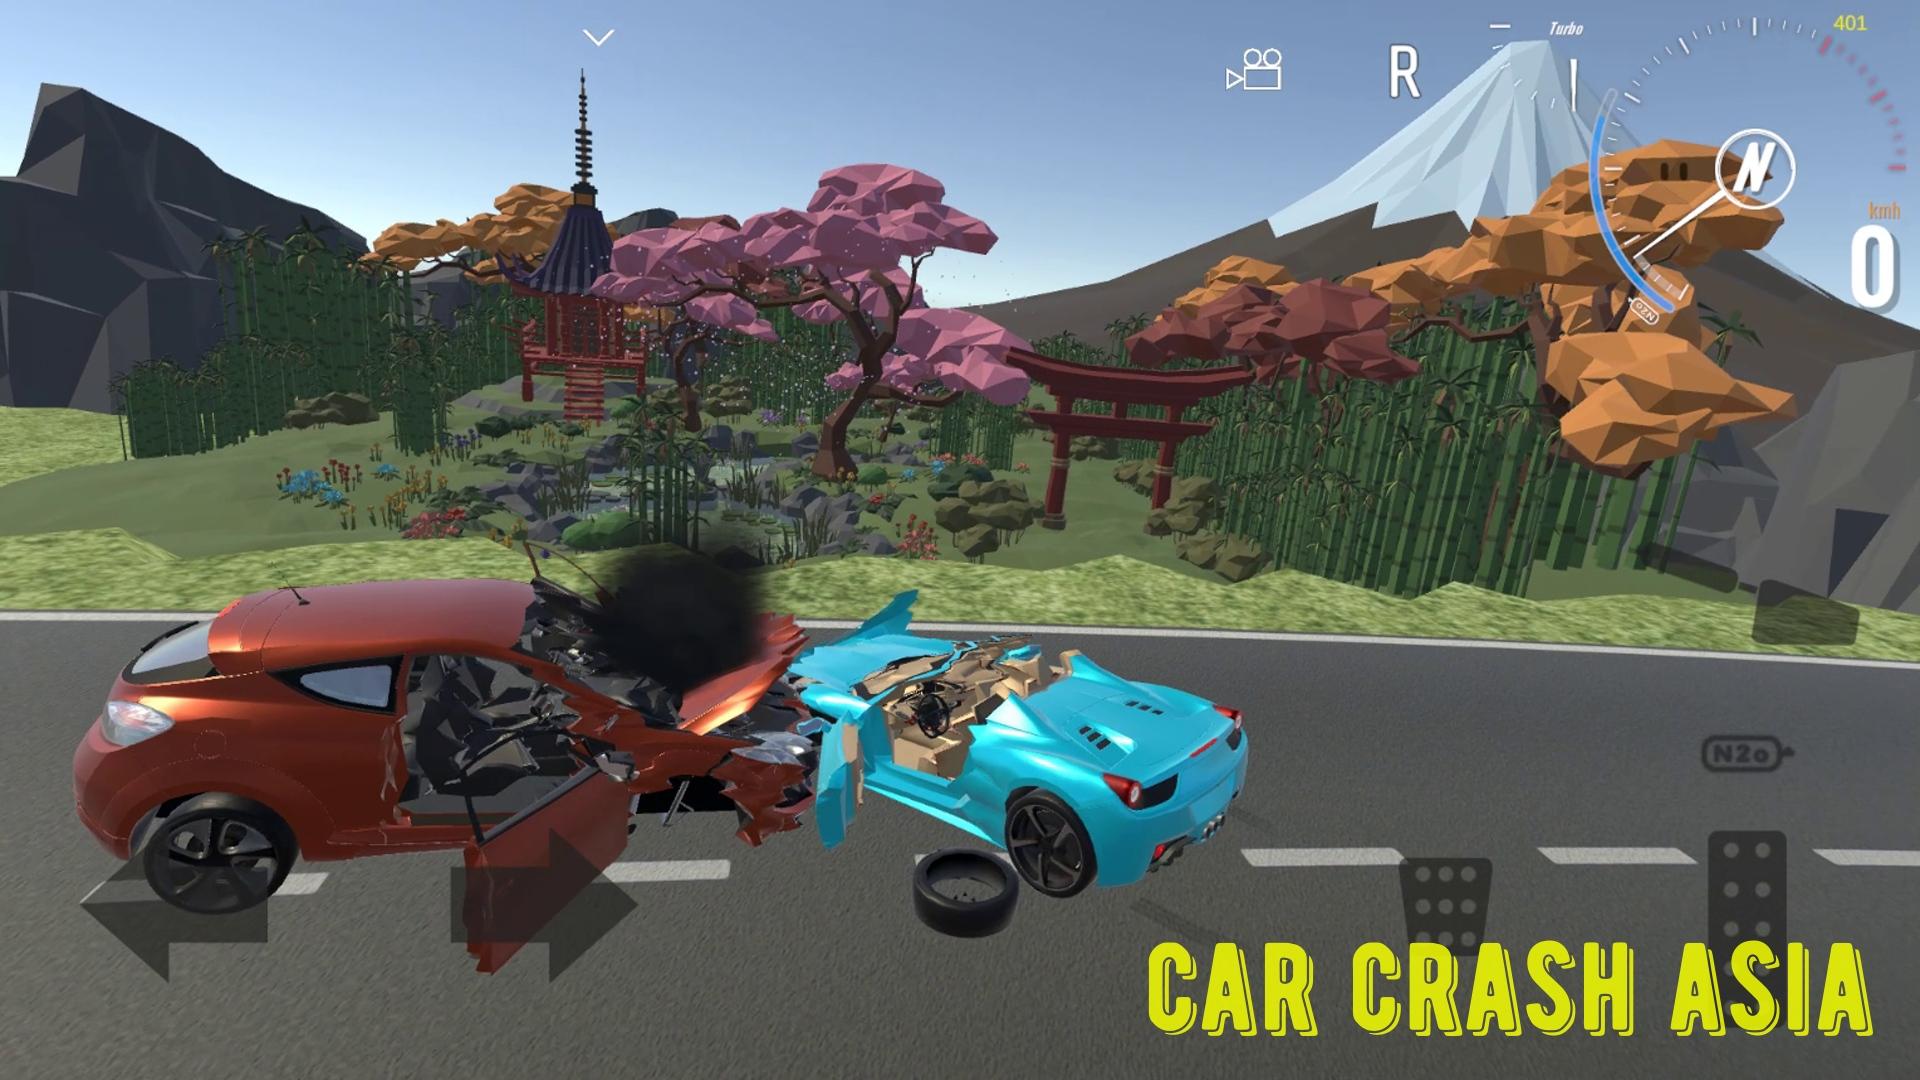 Car crash game. Crash car games for PC. Hittite games car crash. Арабские кар краш игры на андроид. Кар крэш игры